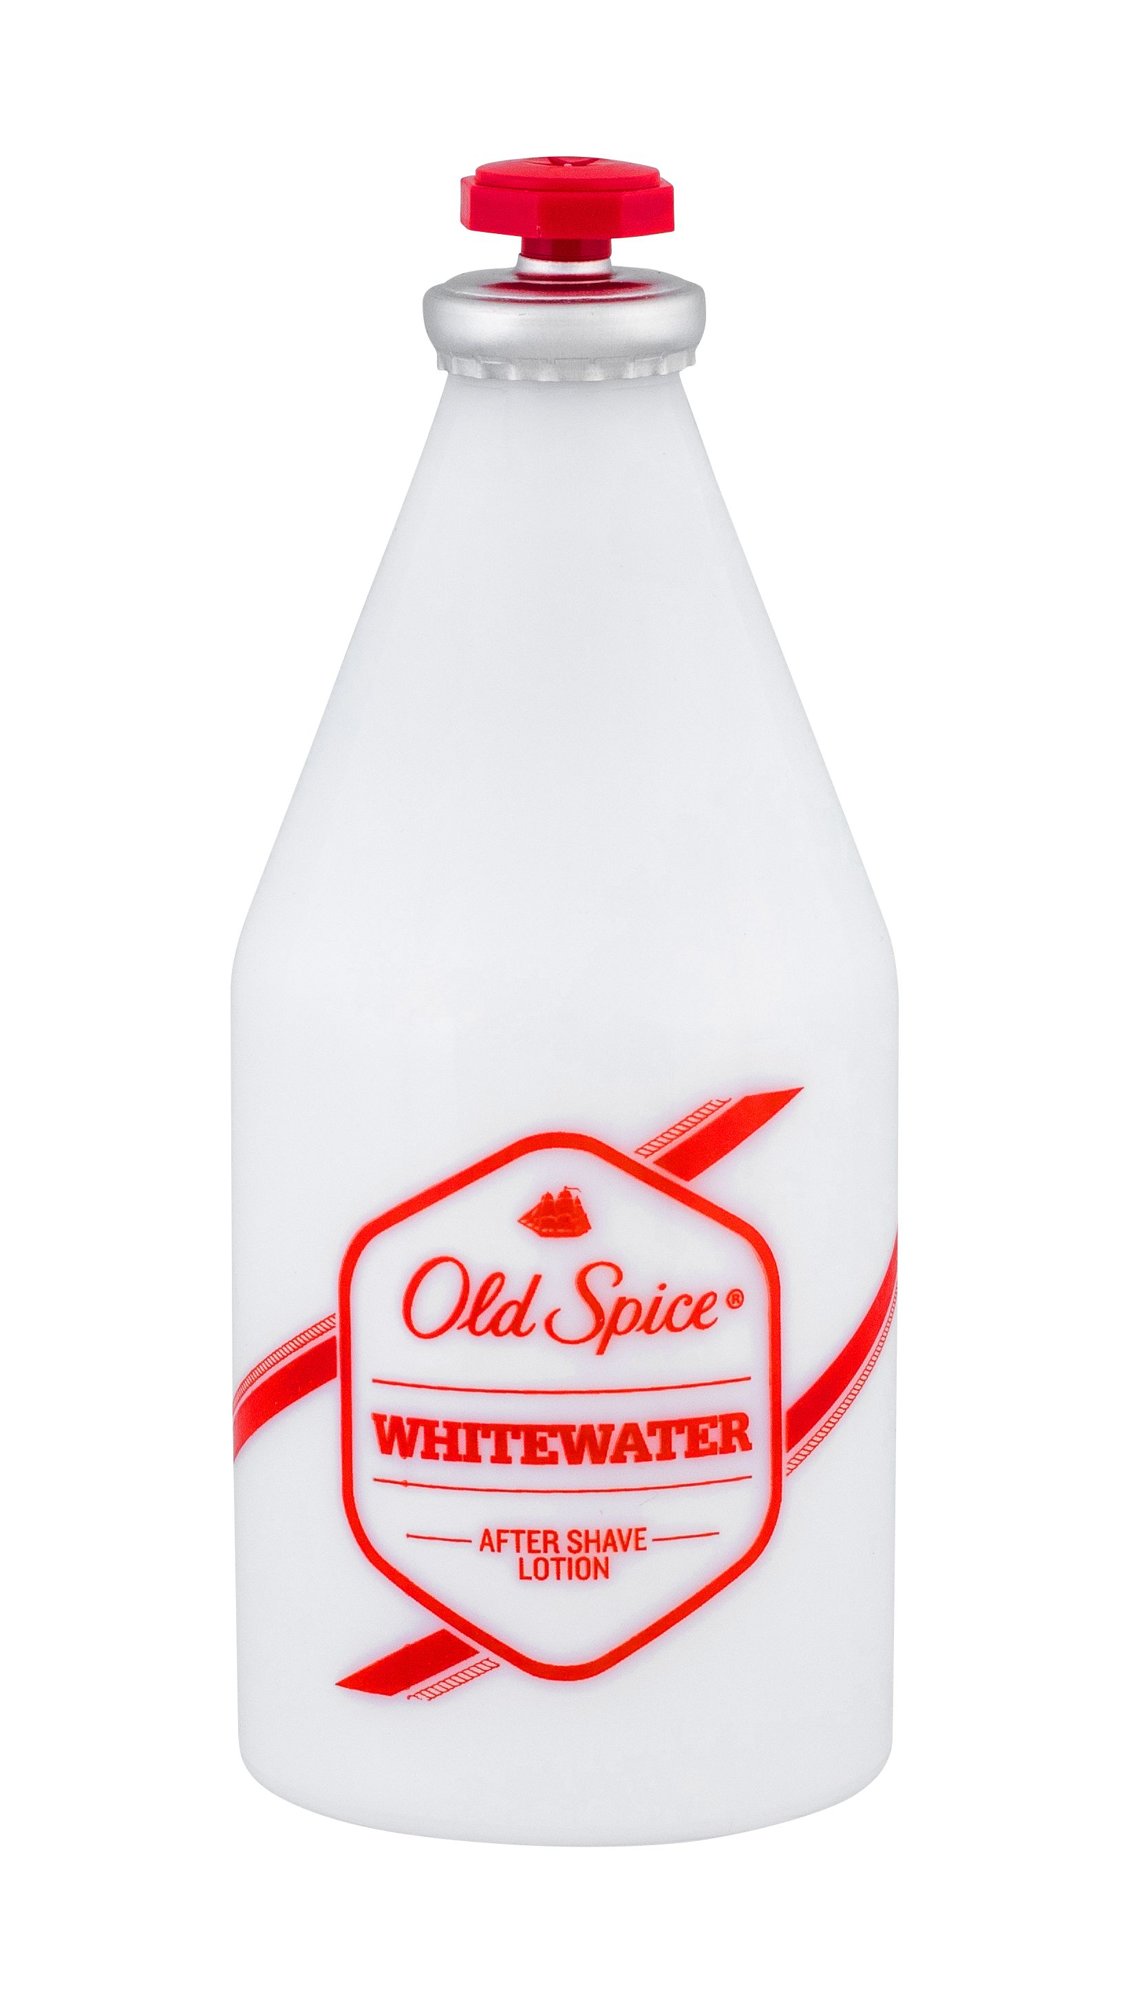 Old Spice Whitewater vanduo po skutimosi